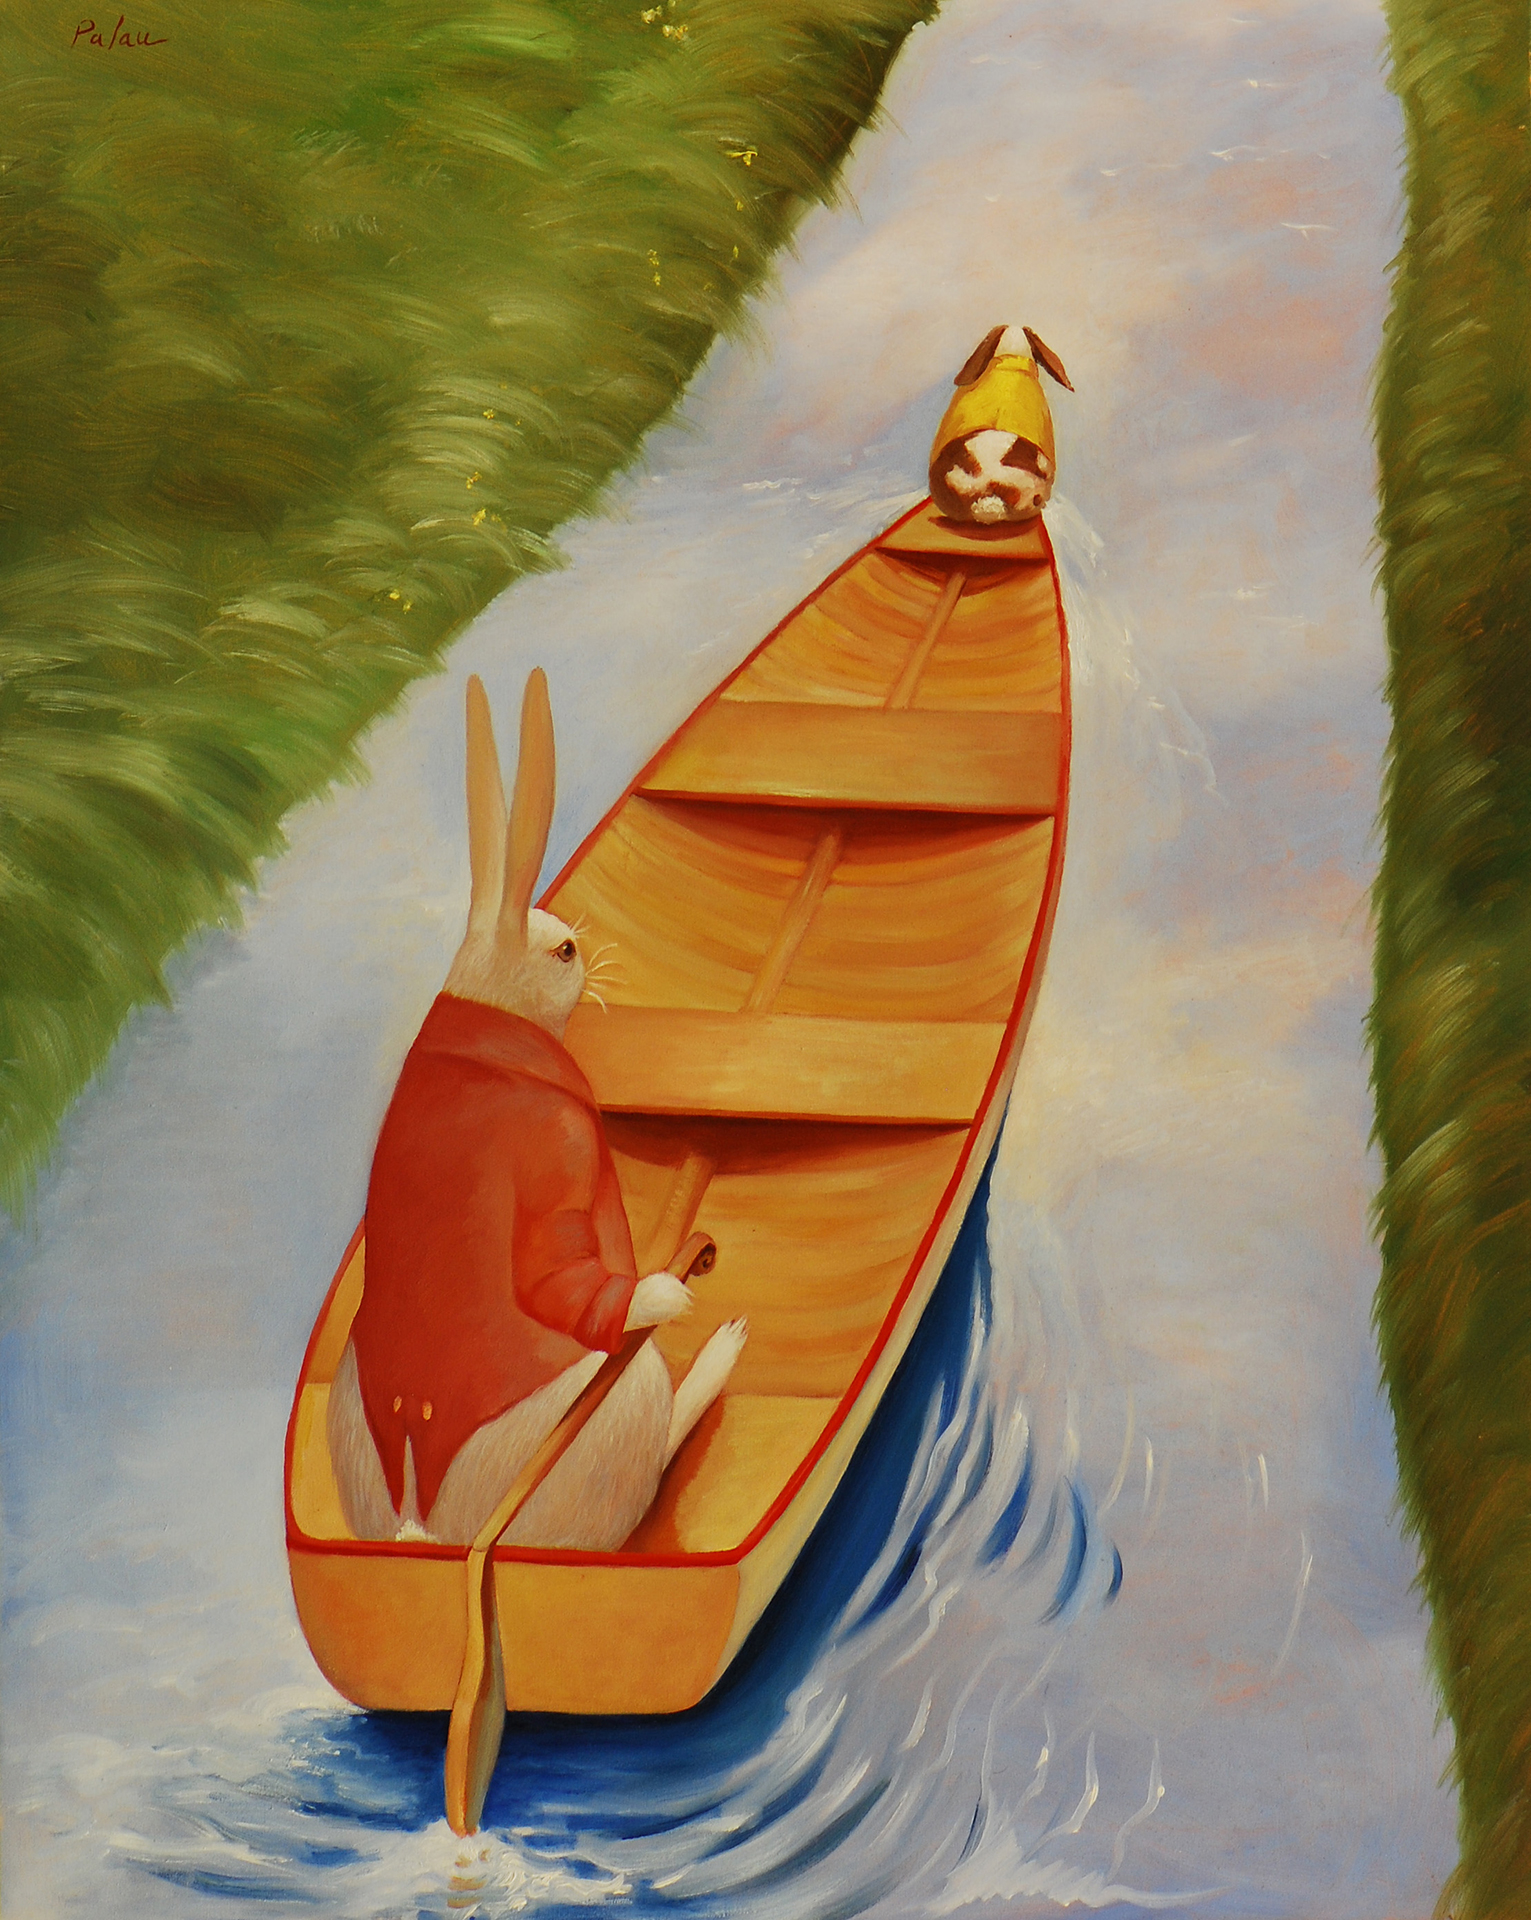 Going Upstream, Fleur Palau - oil on canvas, 28 x 20